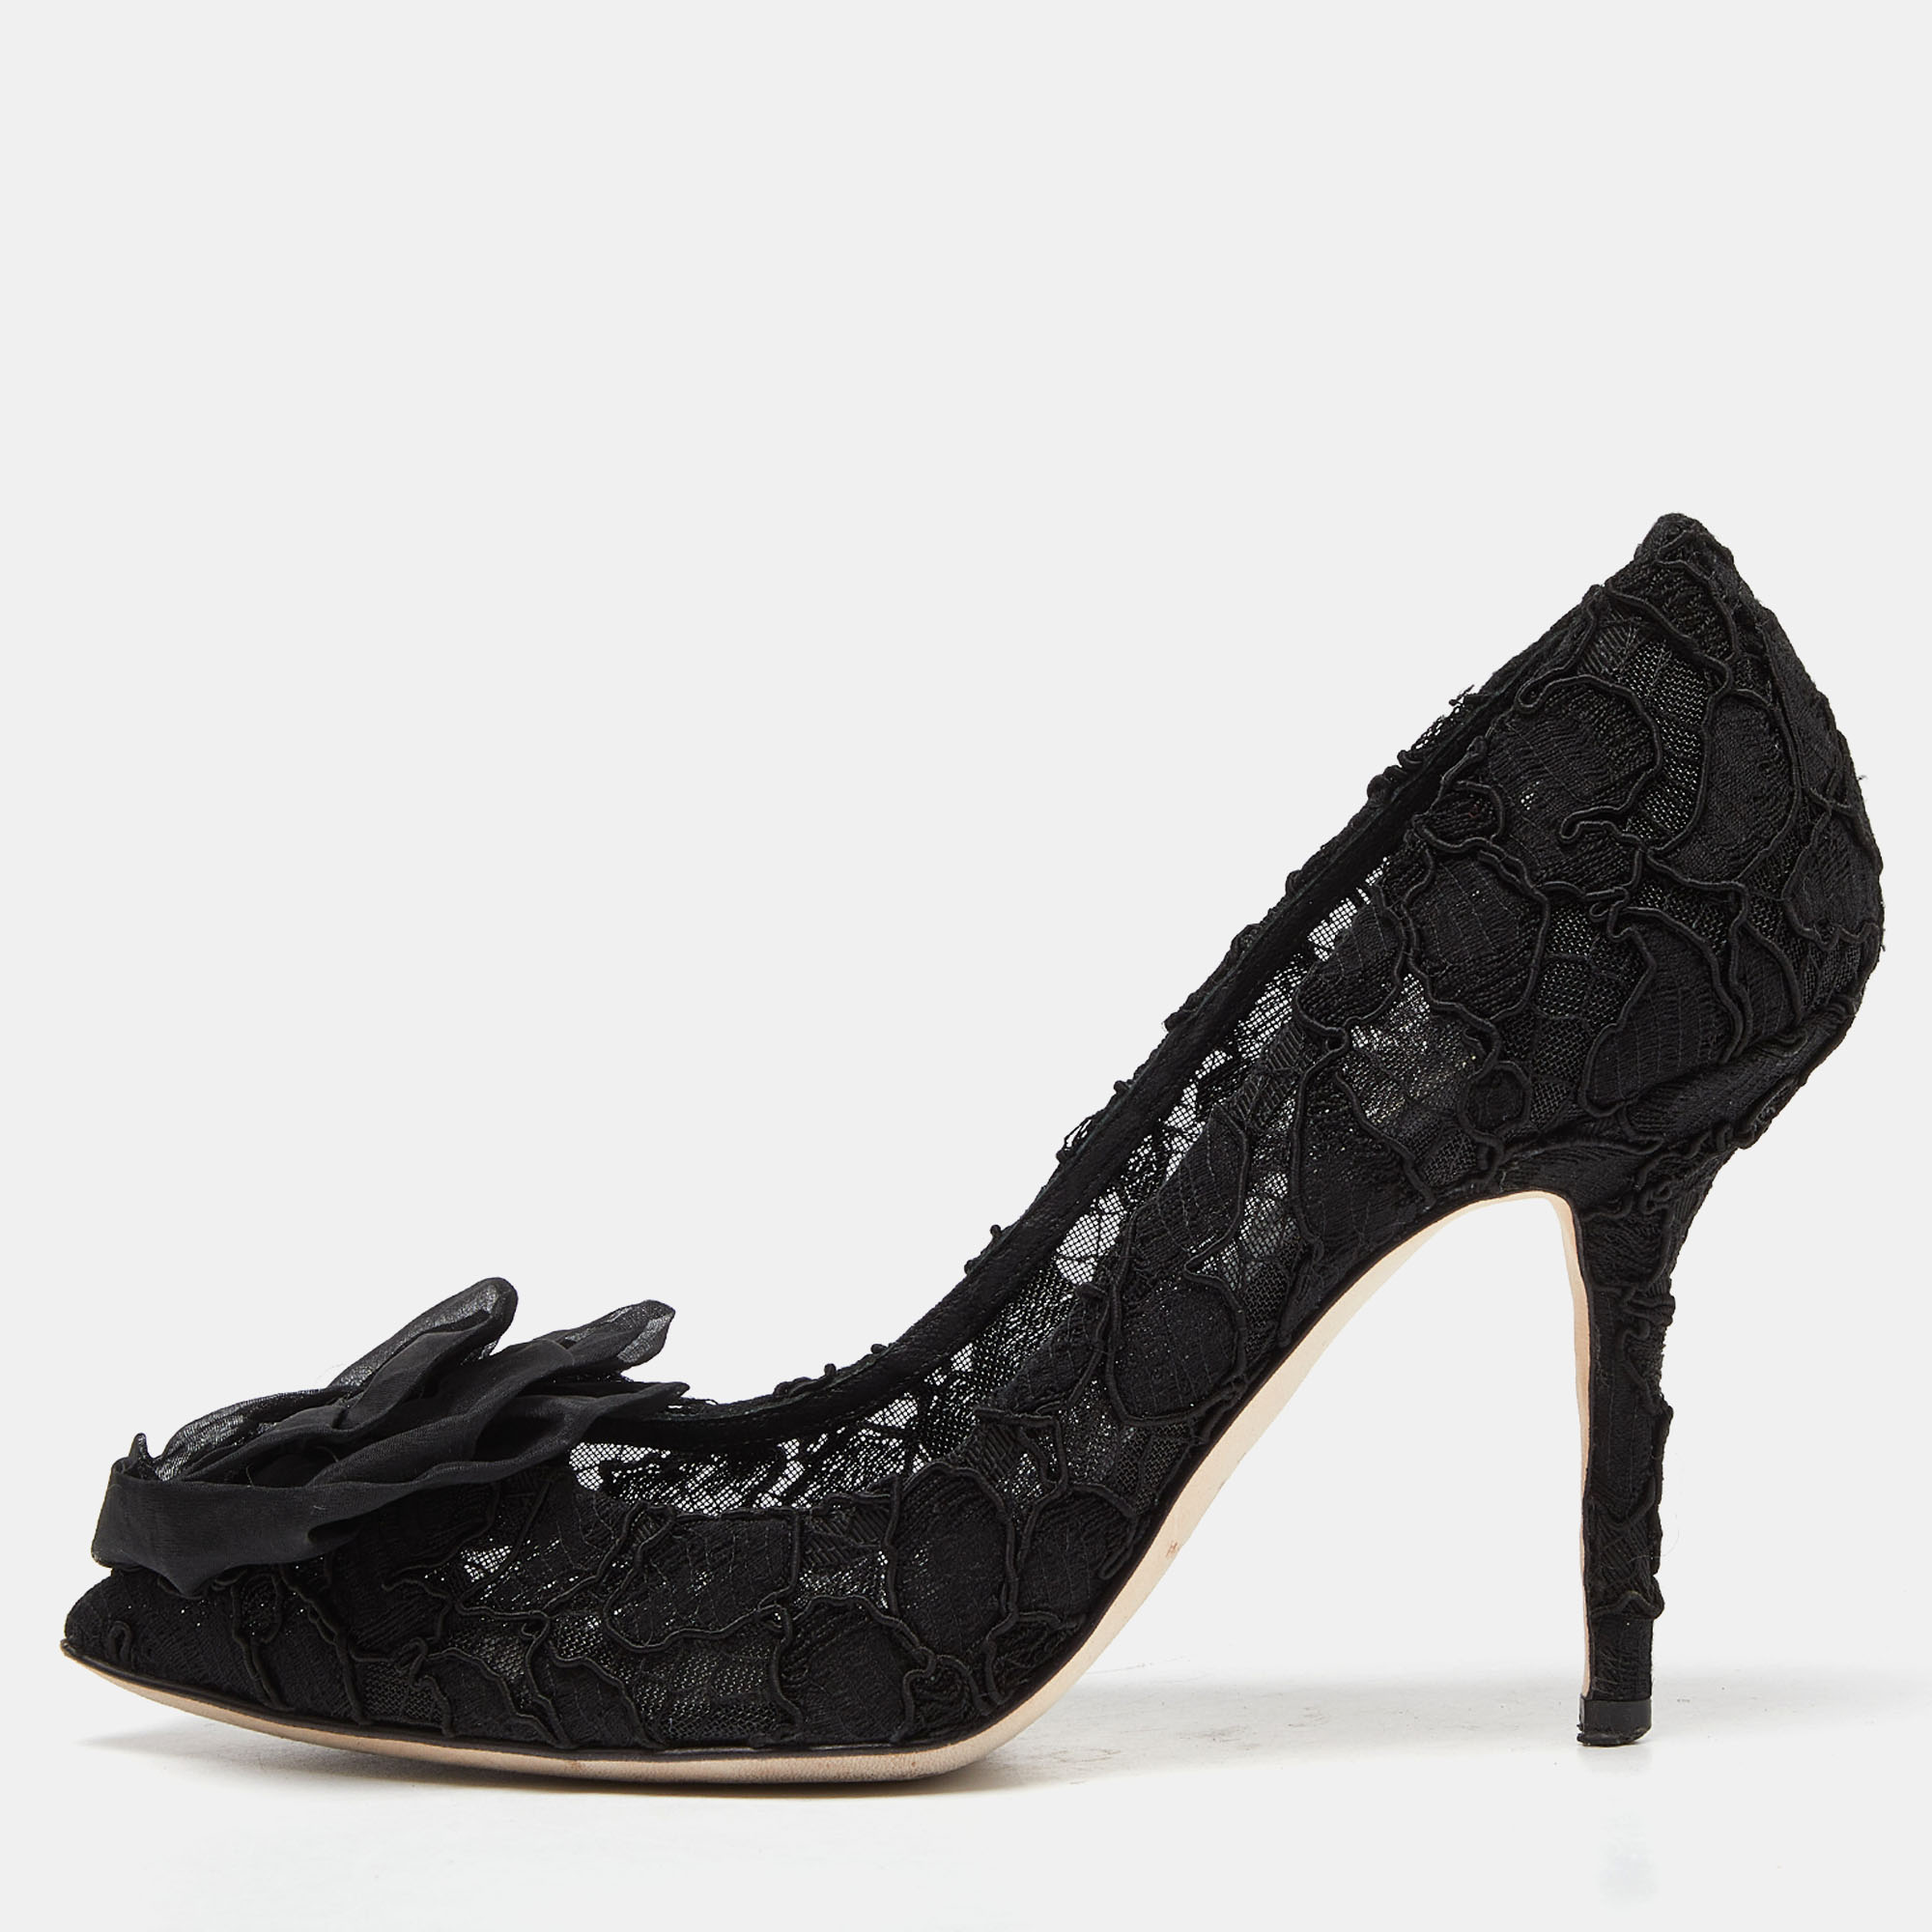 Pre-owned Dolce & Gabbana Black Lace Floral Toe Pumps Size 37